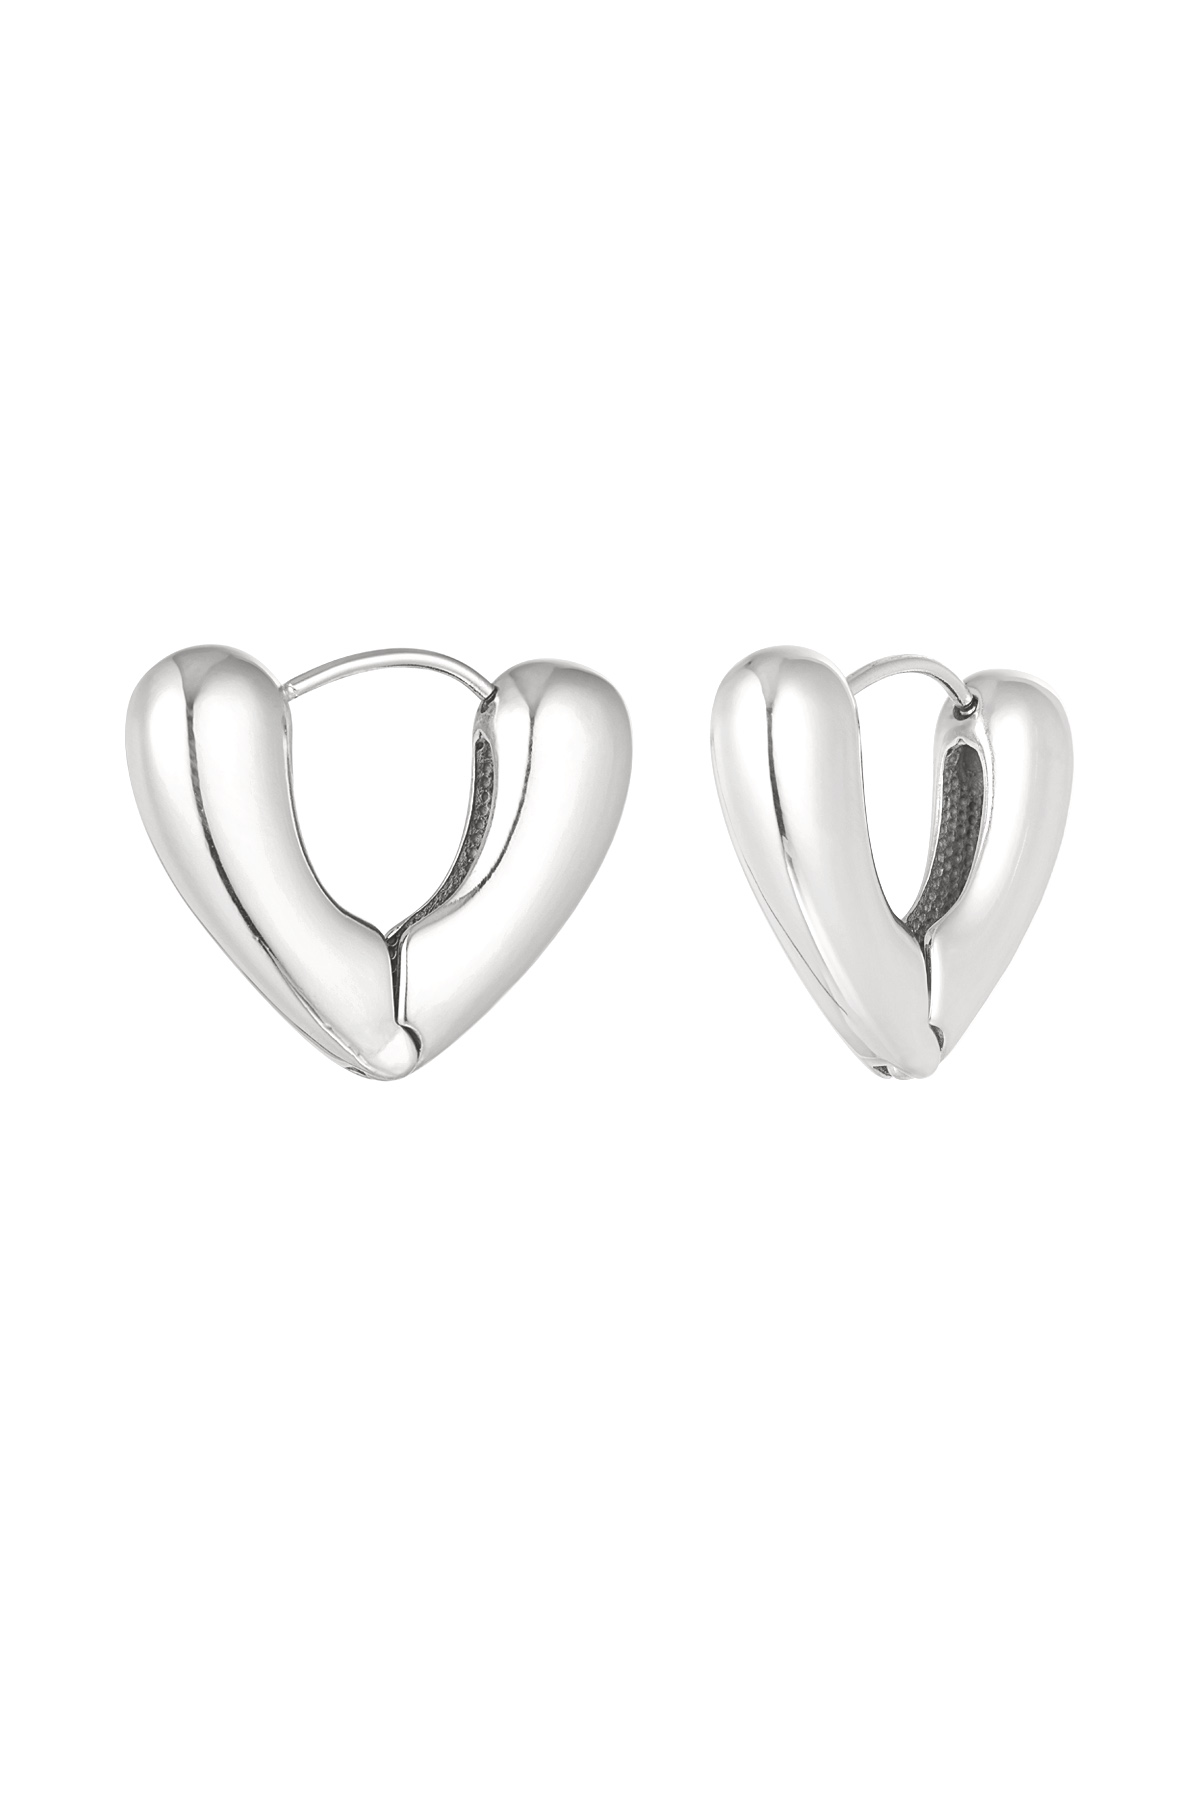 V-shape earrings - silver 